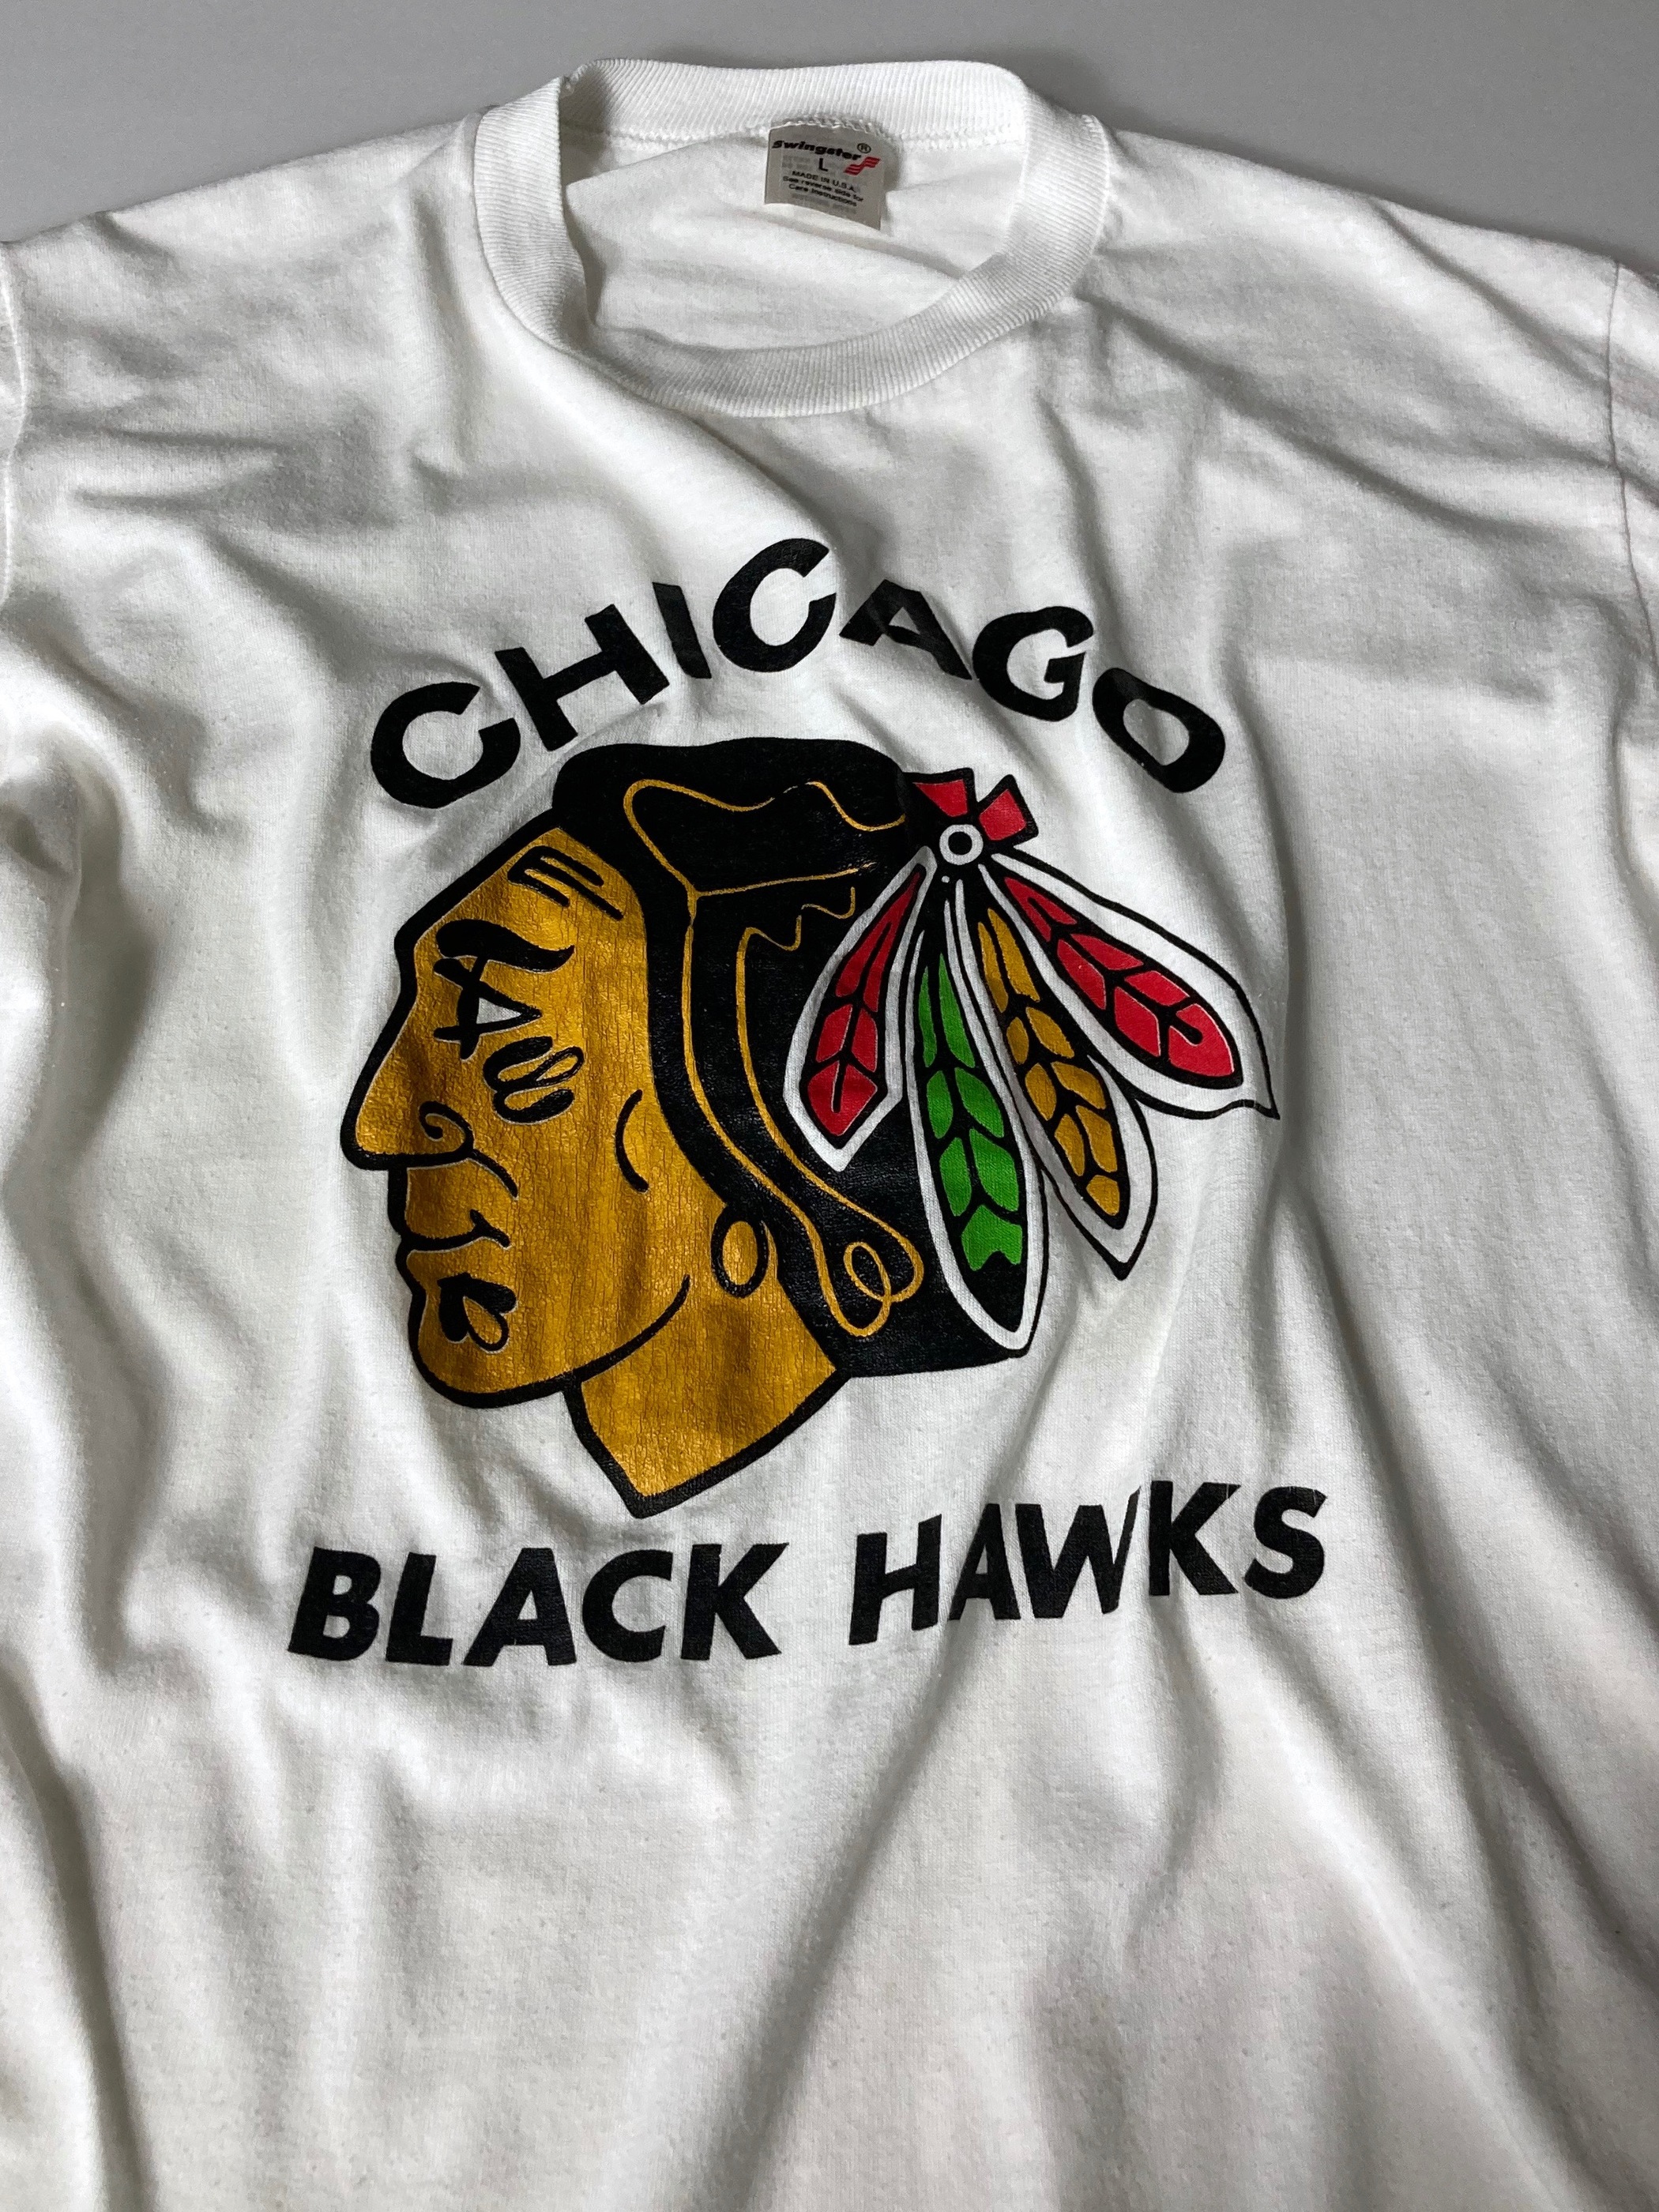 CHICAGO BLACK HAWKS